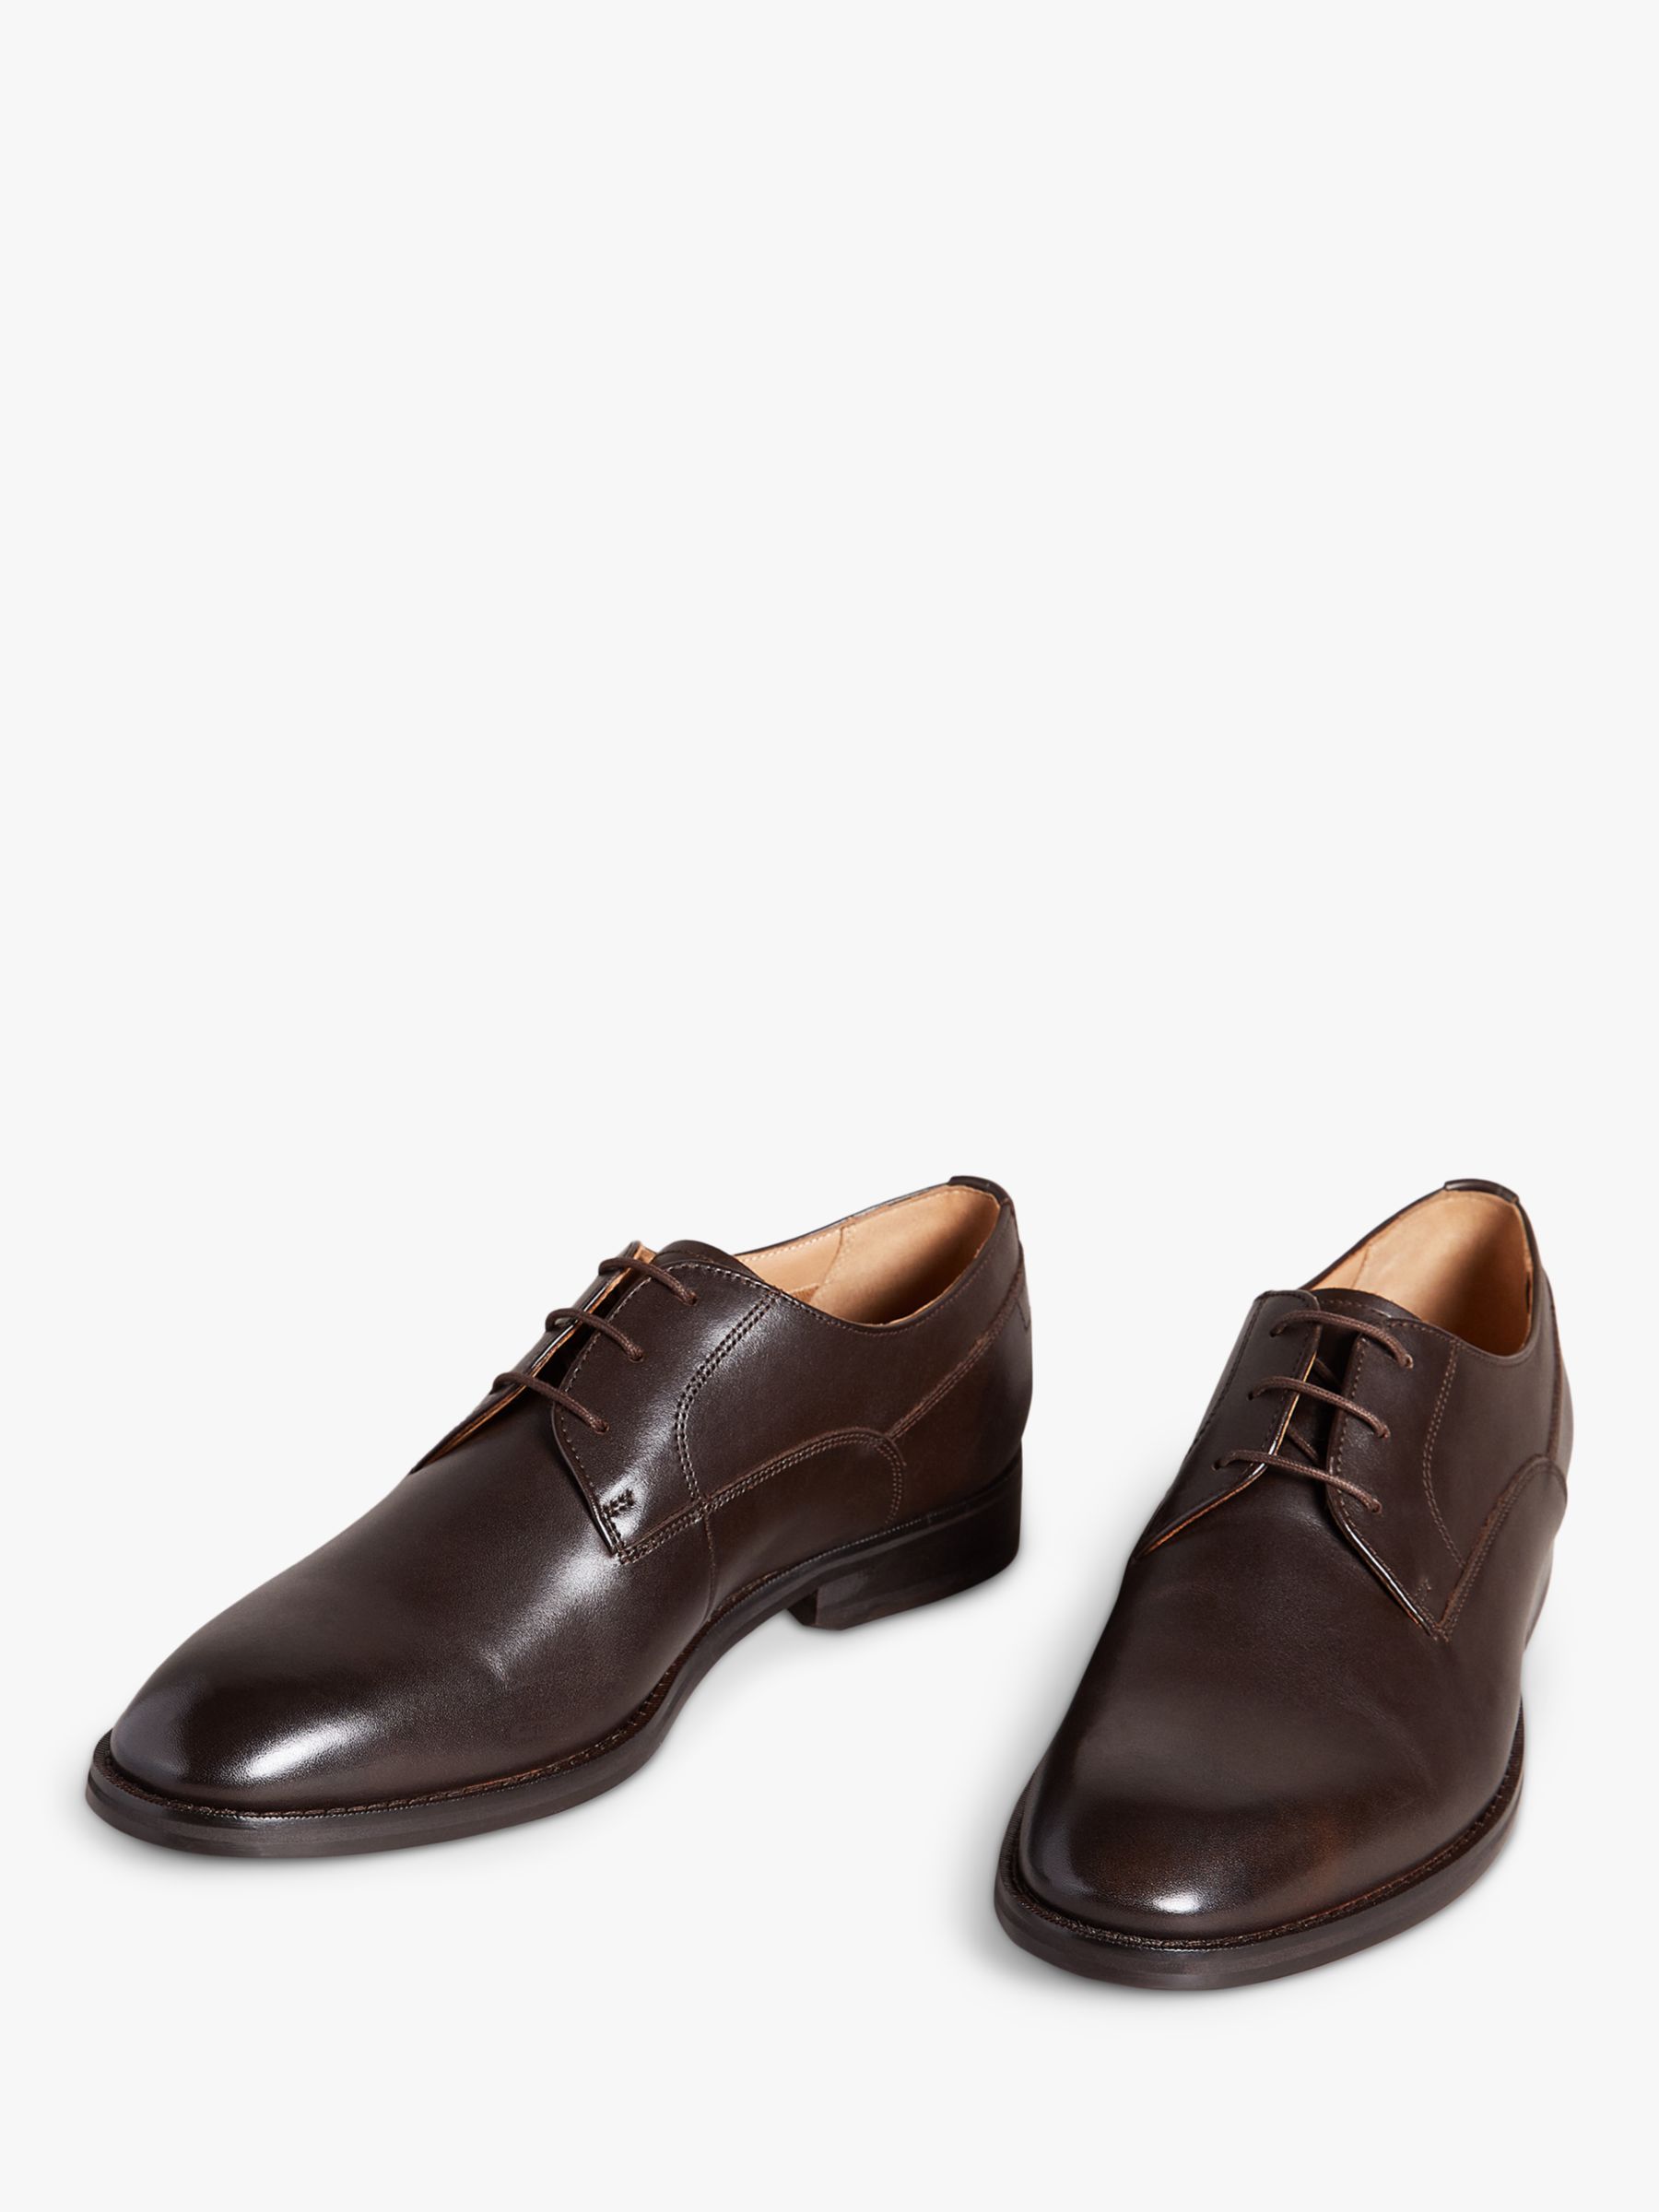 Ted Baker Kampten Leather Derby Shoes, Brown, 7